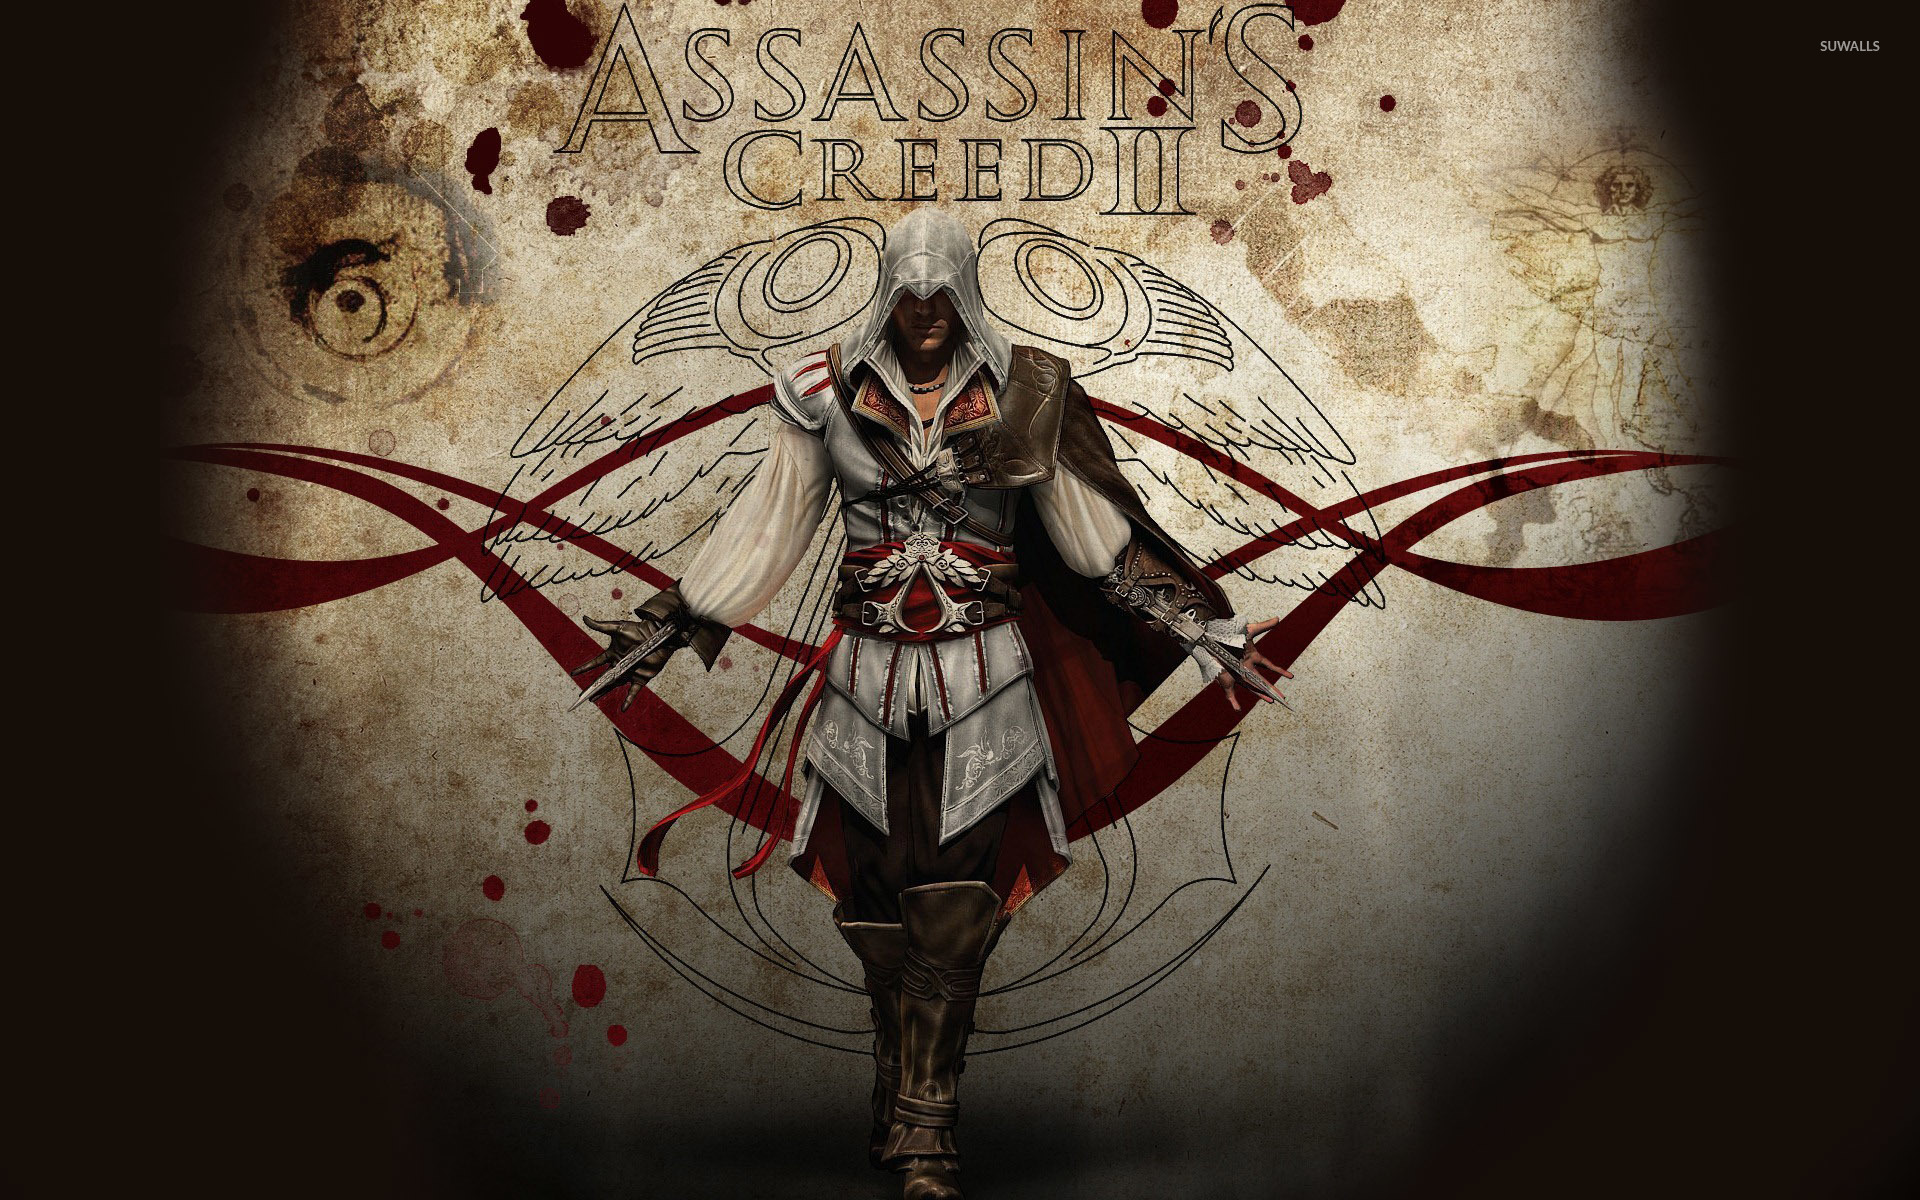 Ezio Assassins Creed 2 wallpaper  1920x1200  216736  WallpaperUP